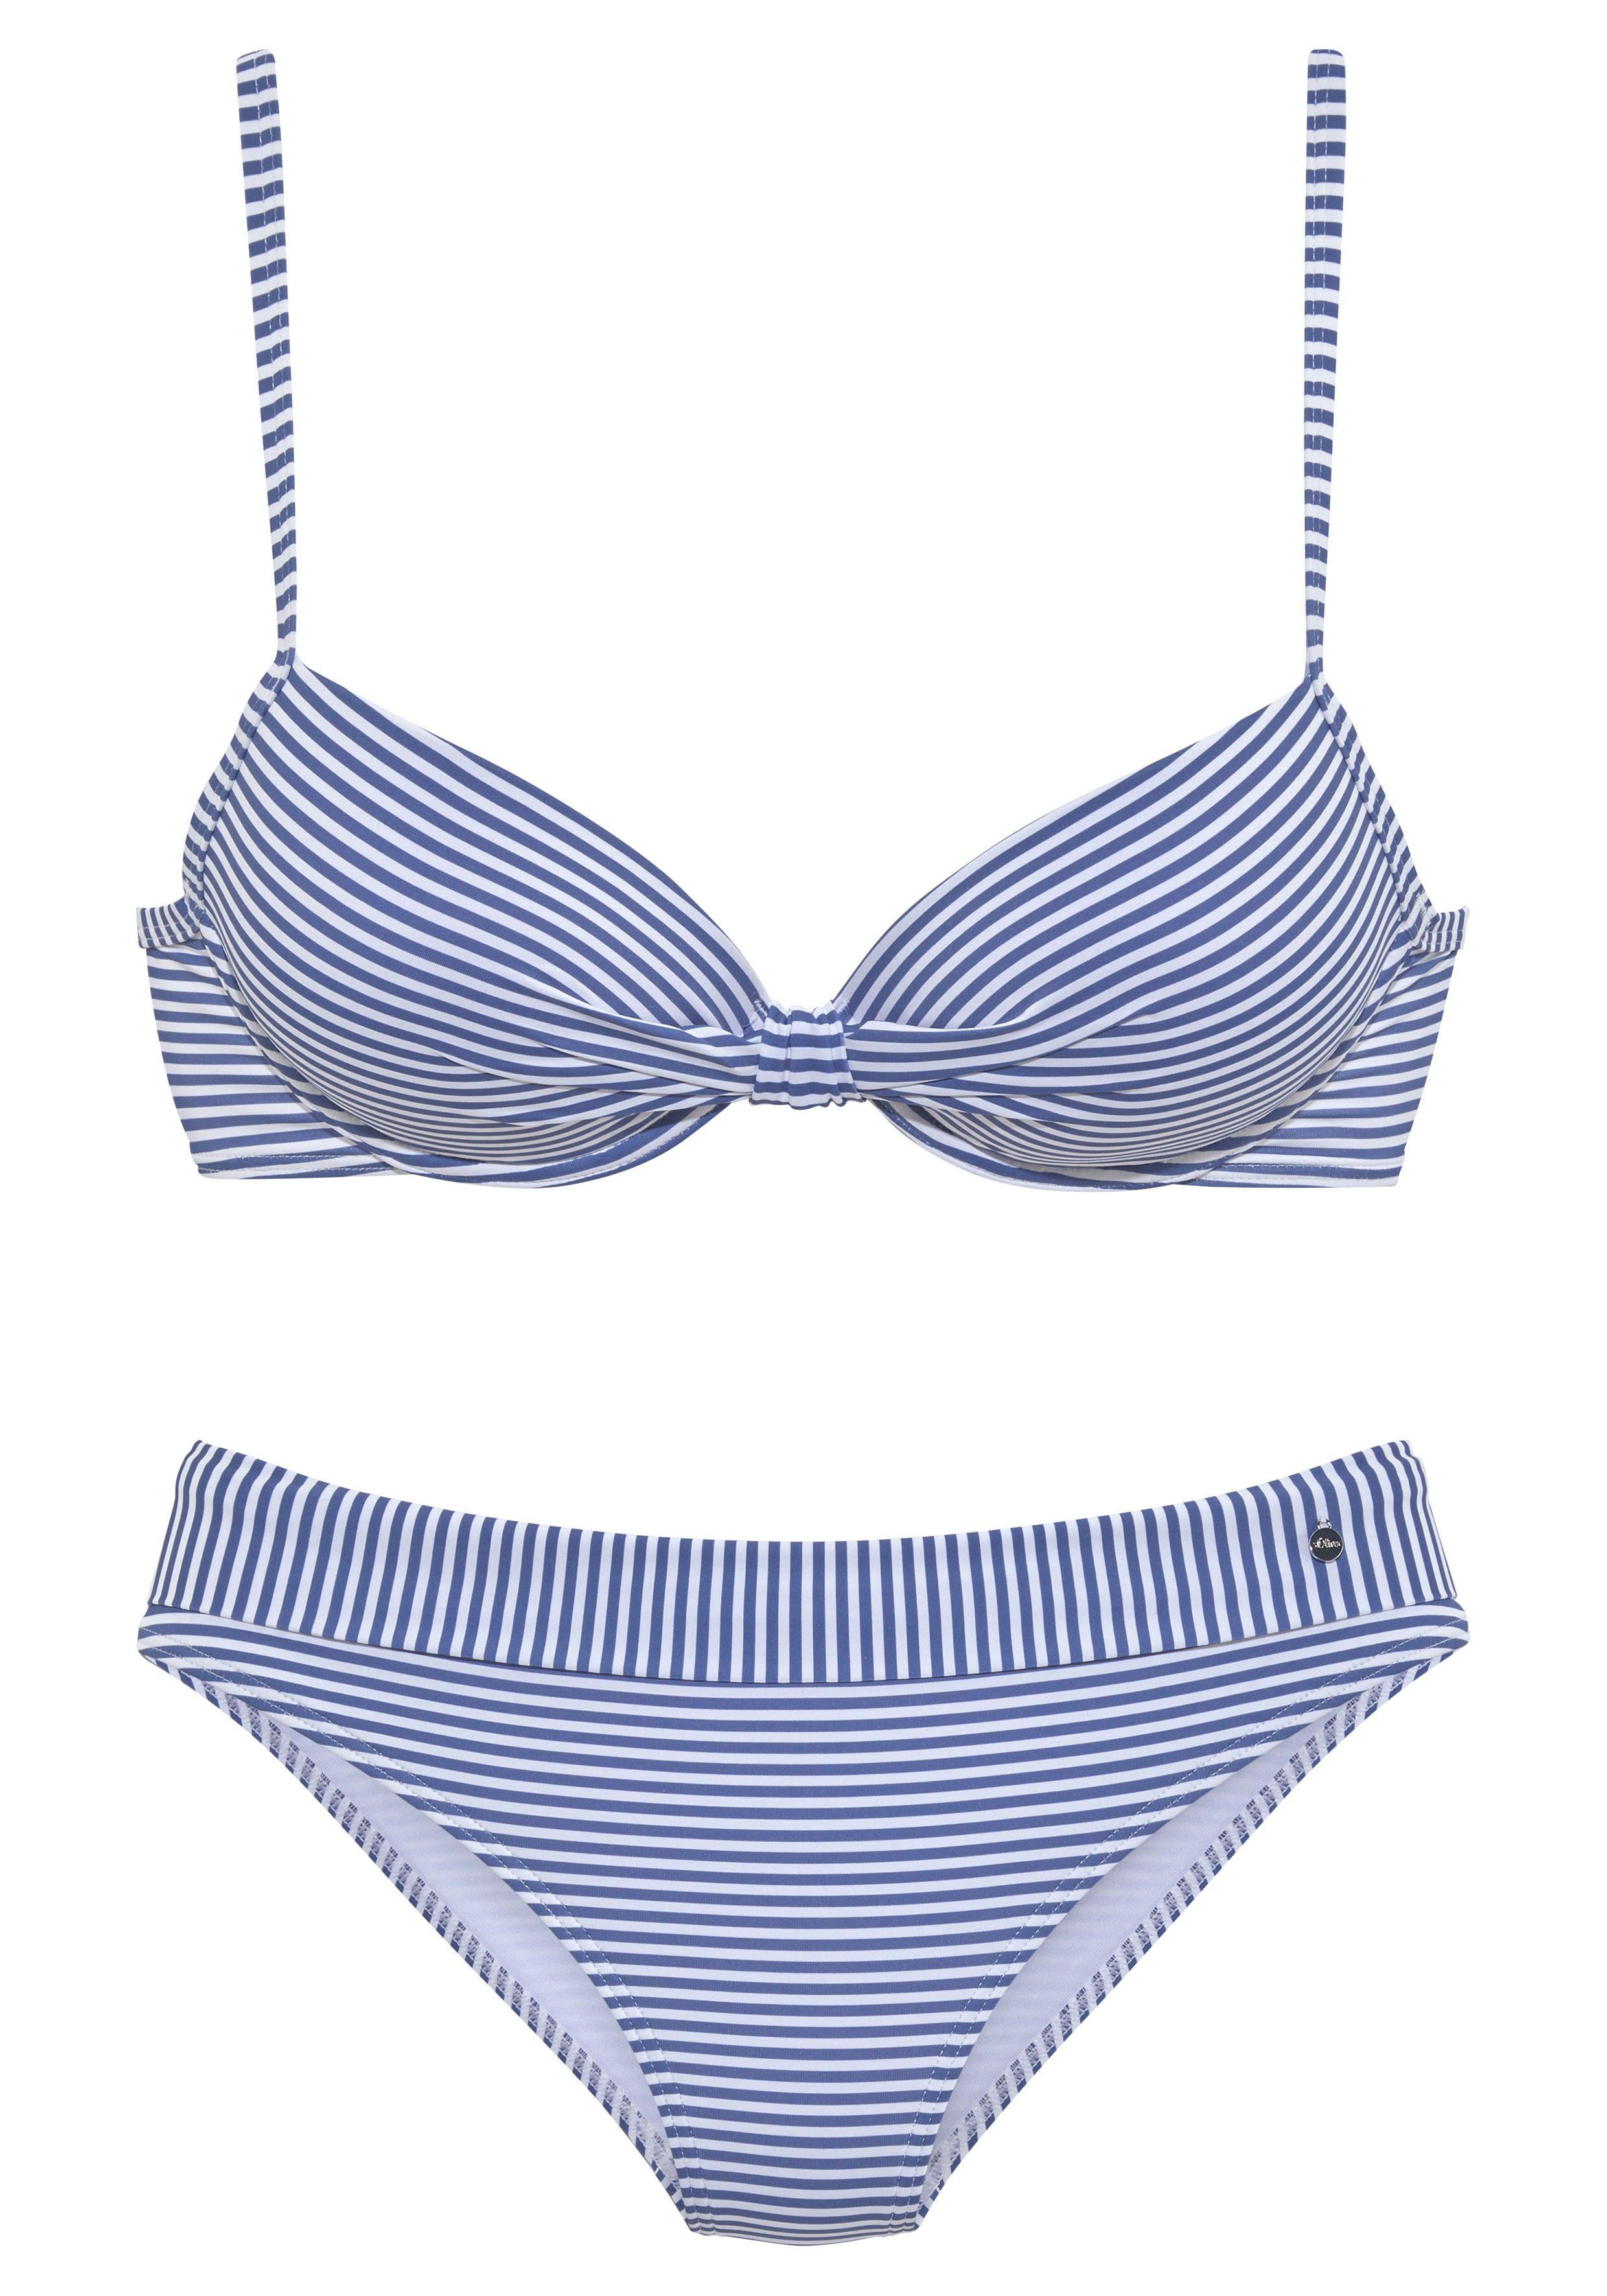 Knoten-Optik s.Oliver in hellblau-weiß Bügel-Bikini